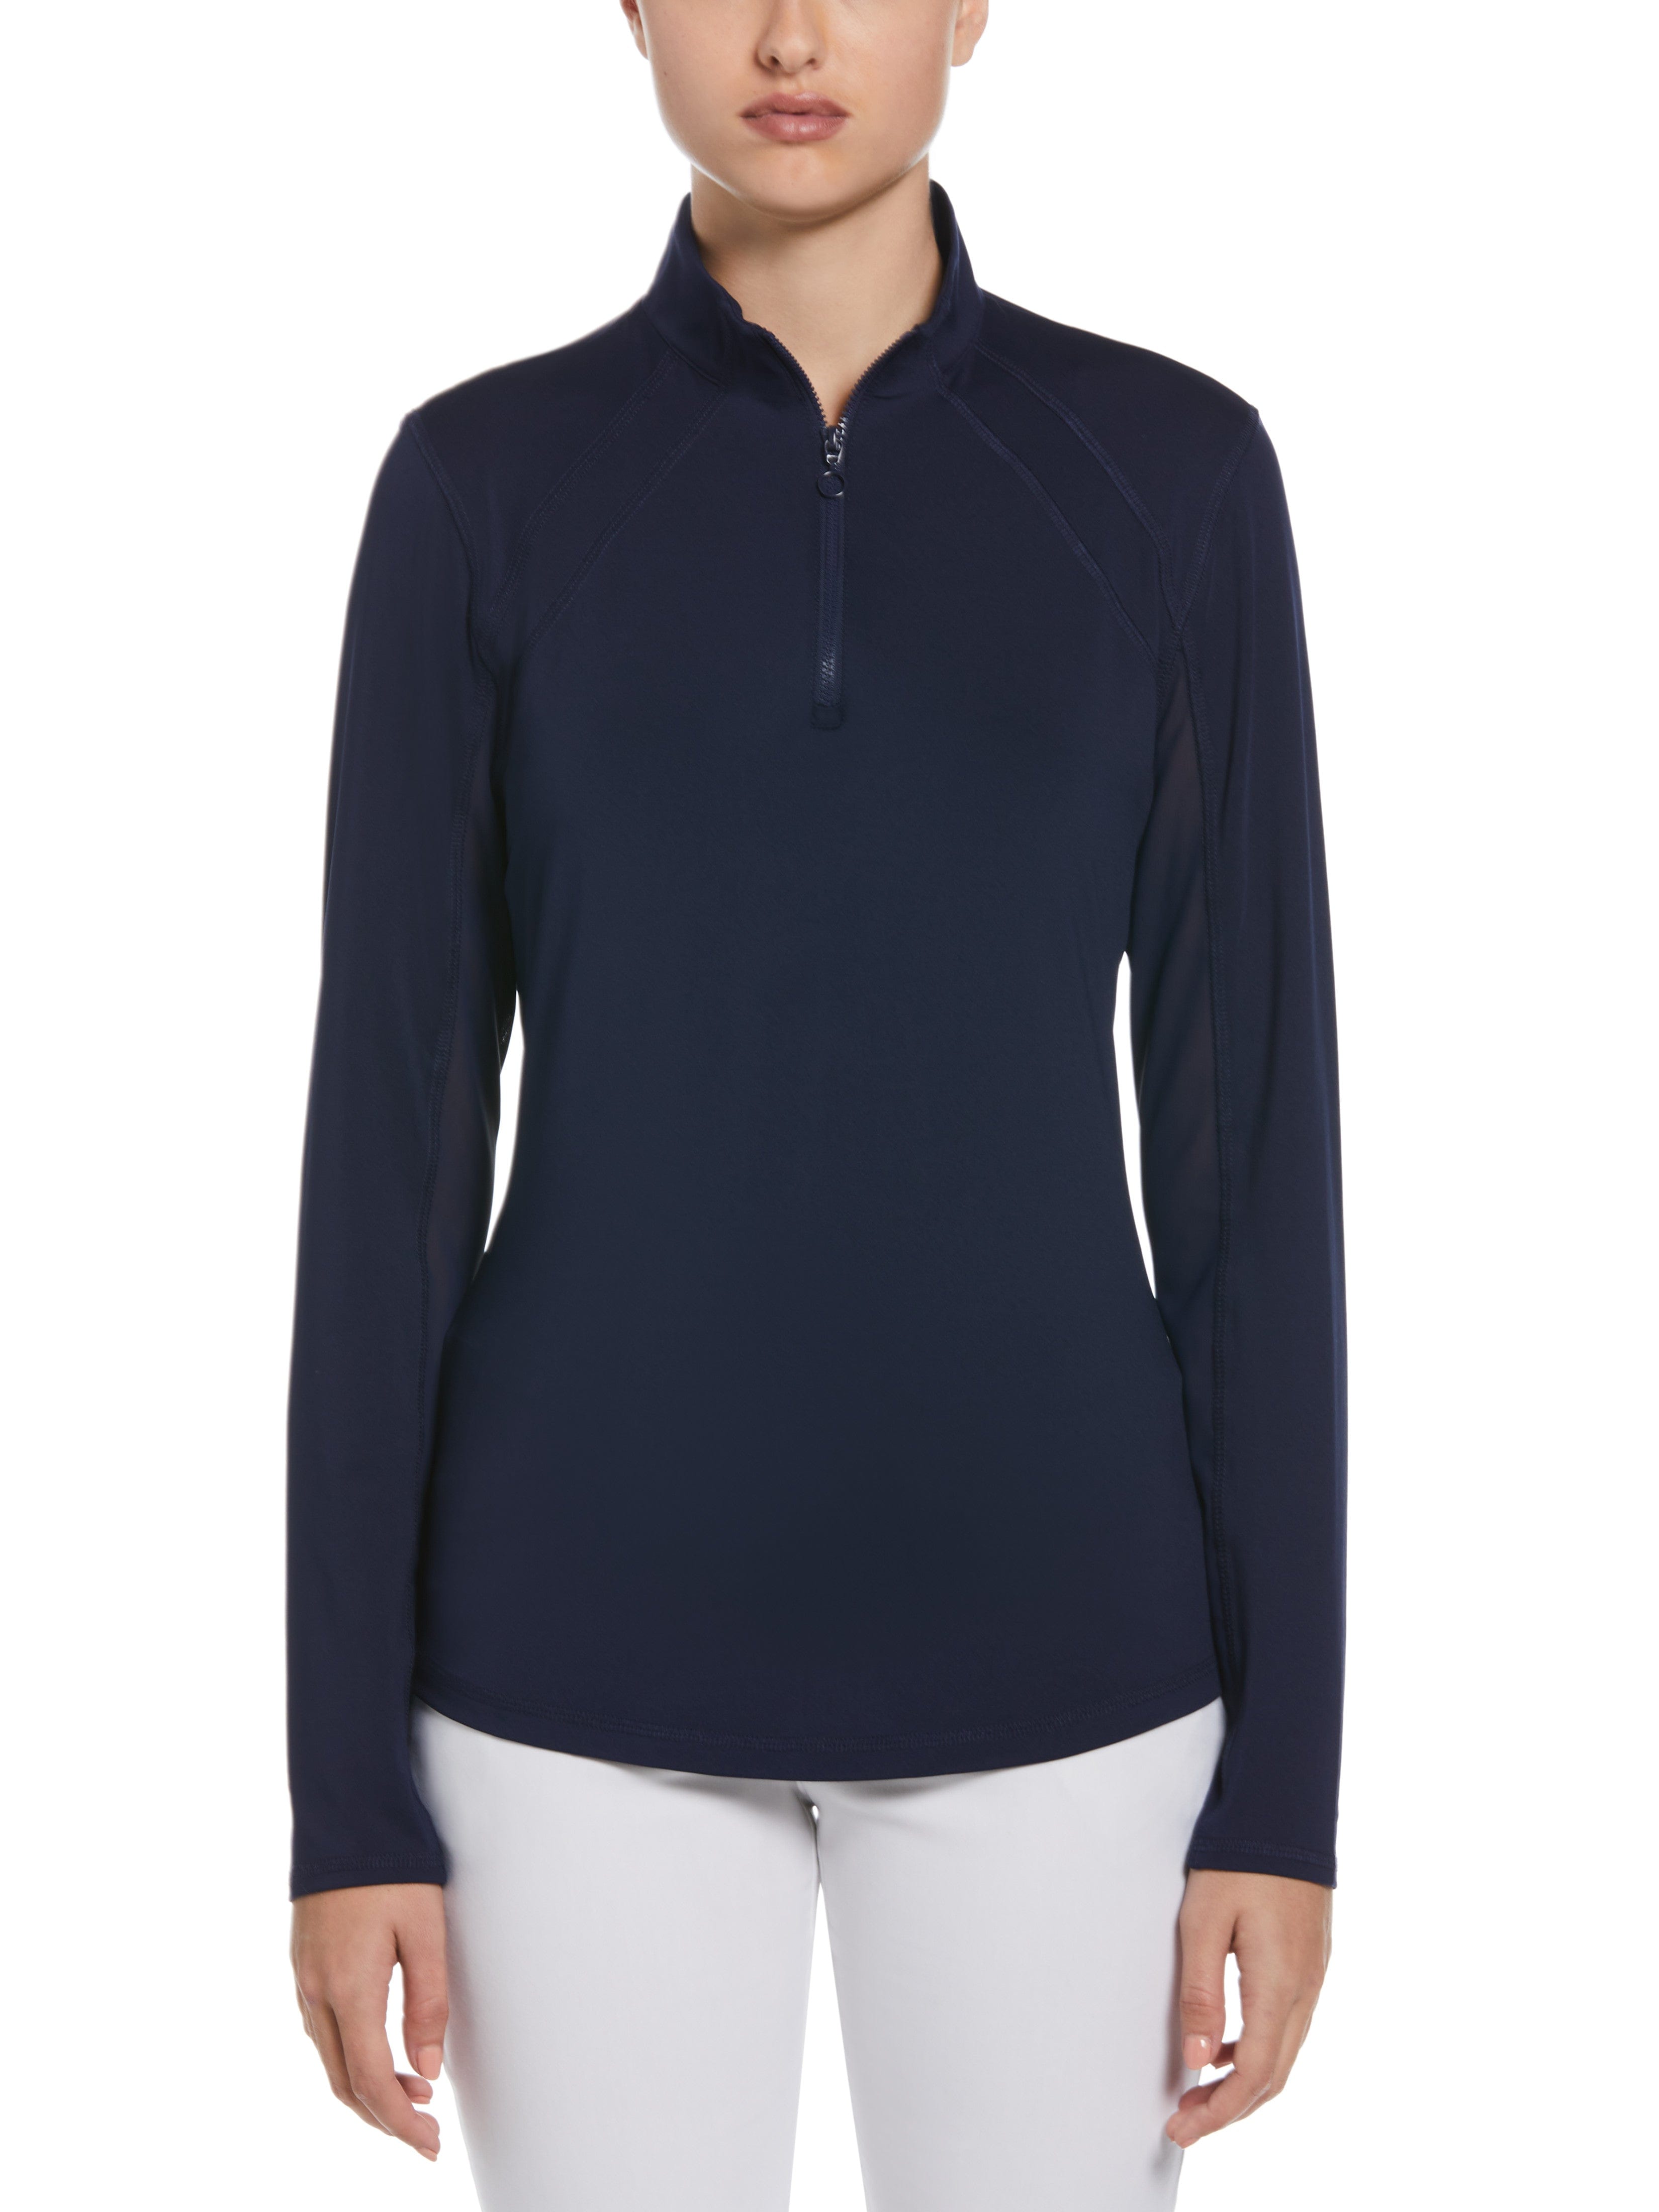 PGA TOUR Apparel Womens Sun Protection Golf Shirt w/ Mesh Panels, Size Medium, Navy Blue, Polyester/Spandex | Golf Apparel Shop